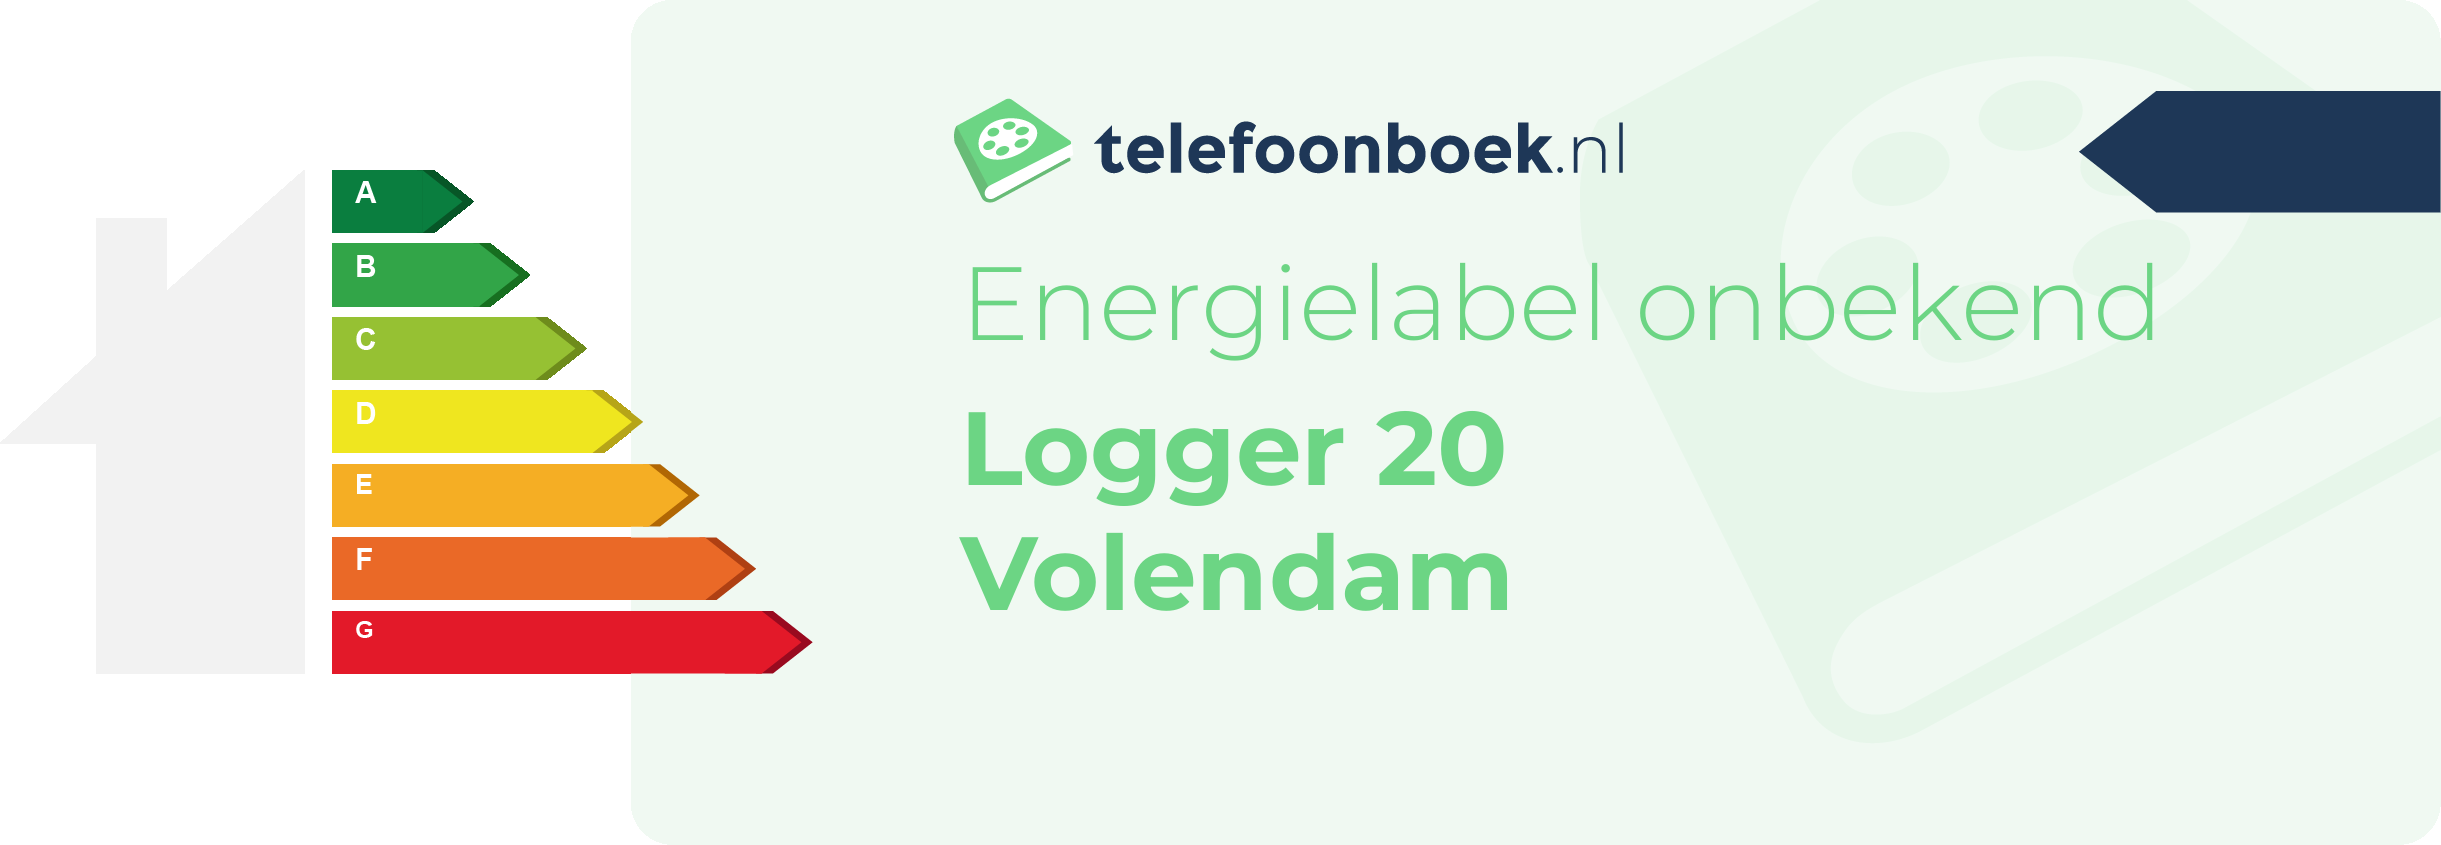 Energielabel Logger 20 Volendam